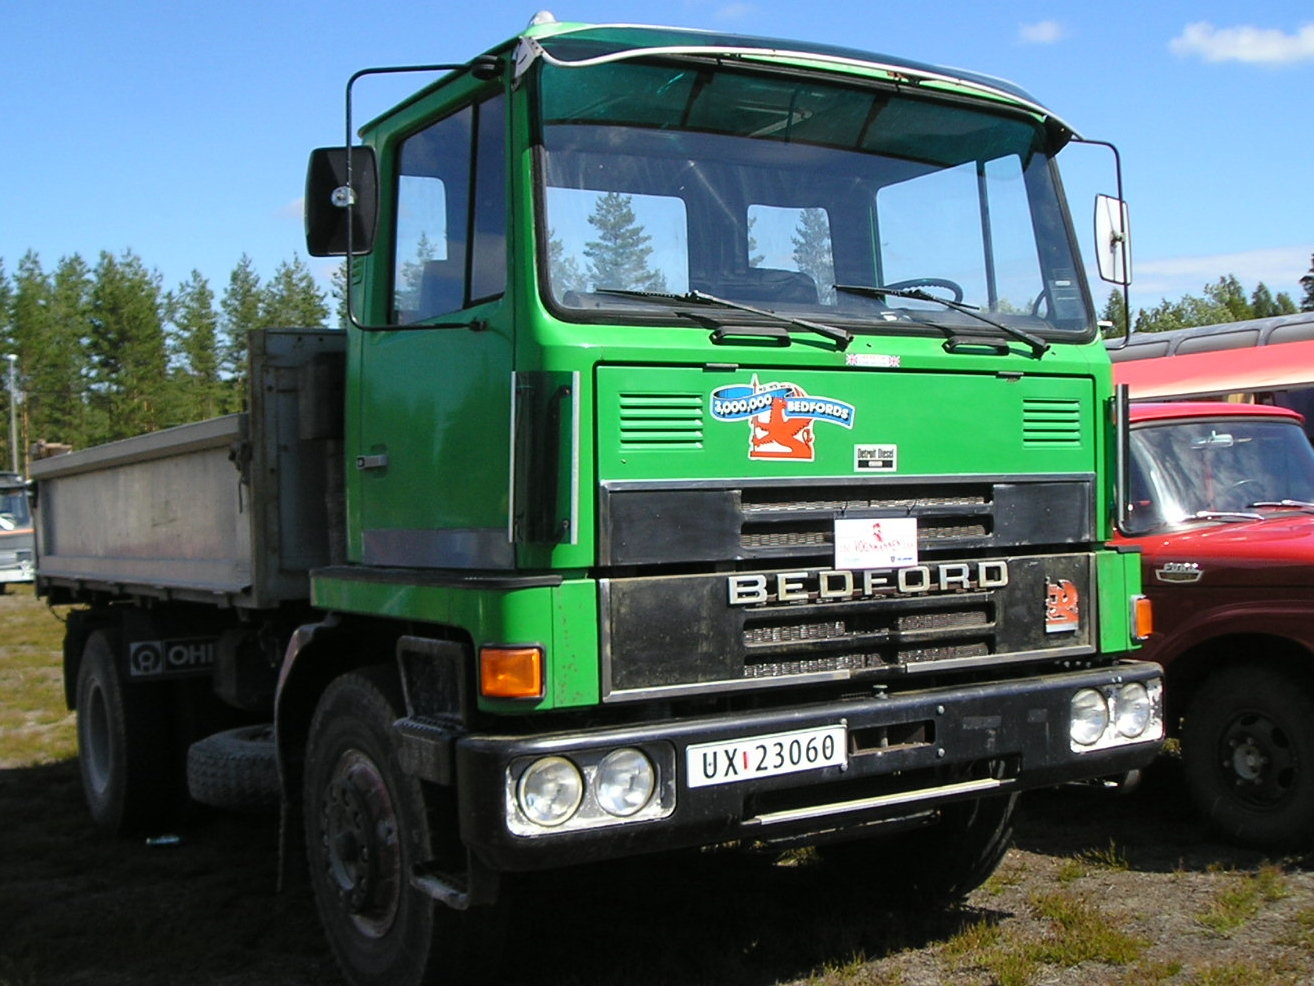 Bedford TM1700